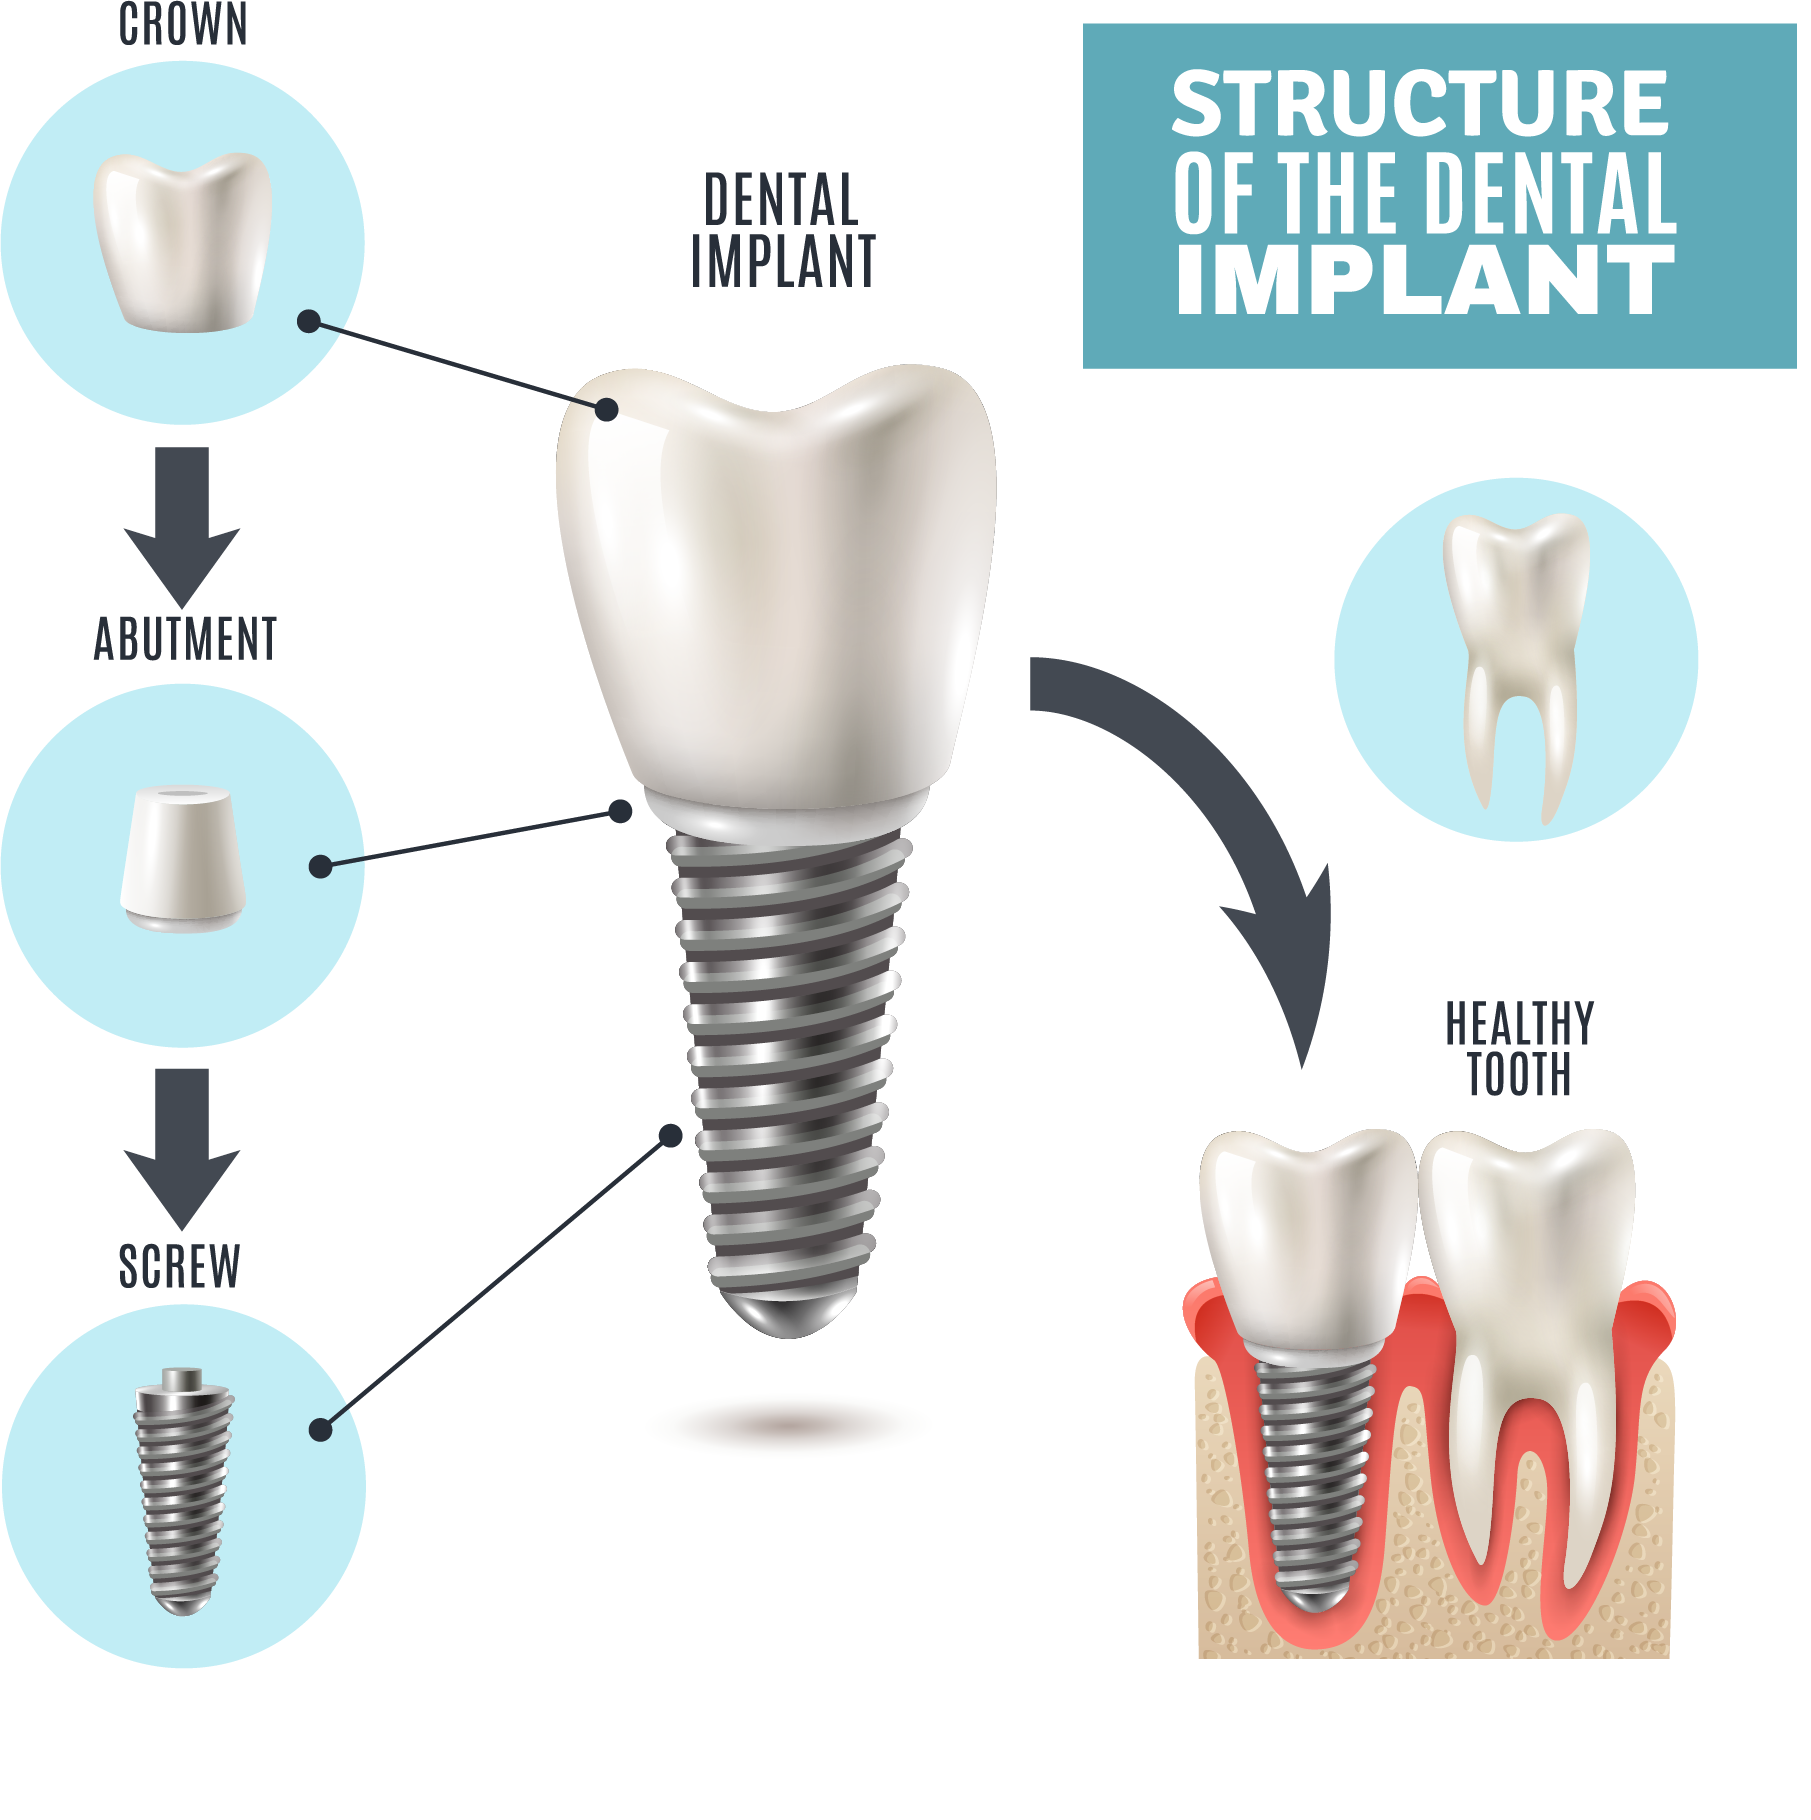 کلینیک دندانپزشکی آرکا - ساختار ایمپلنت دندان